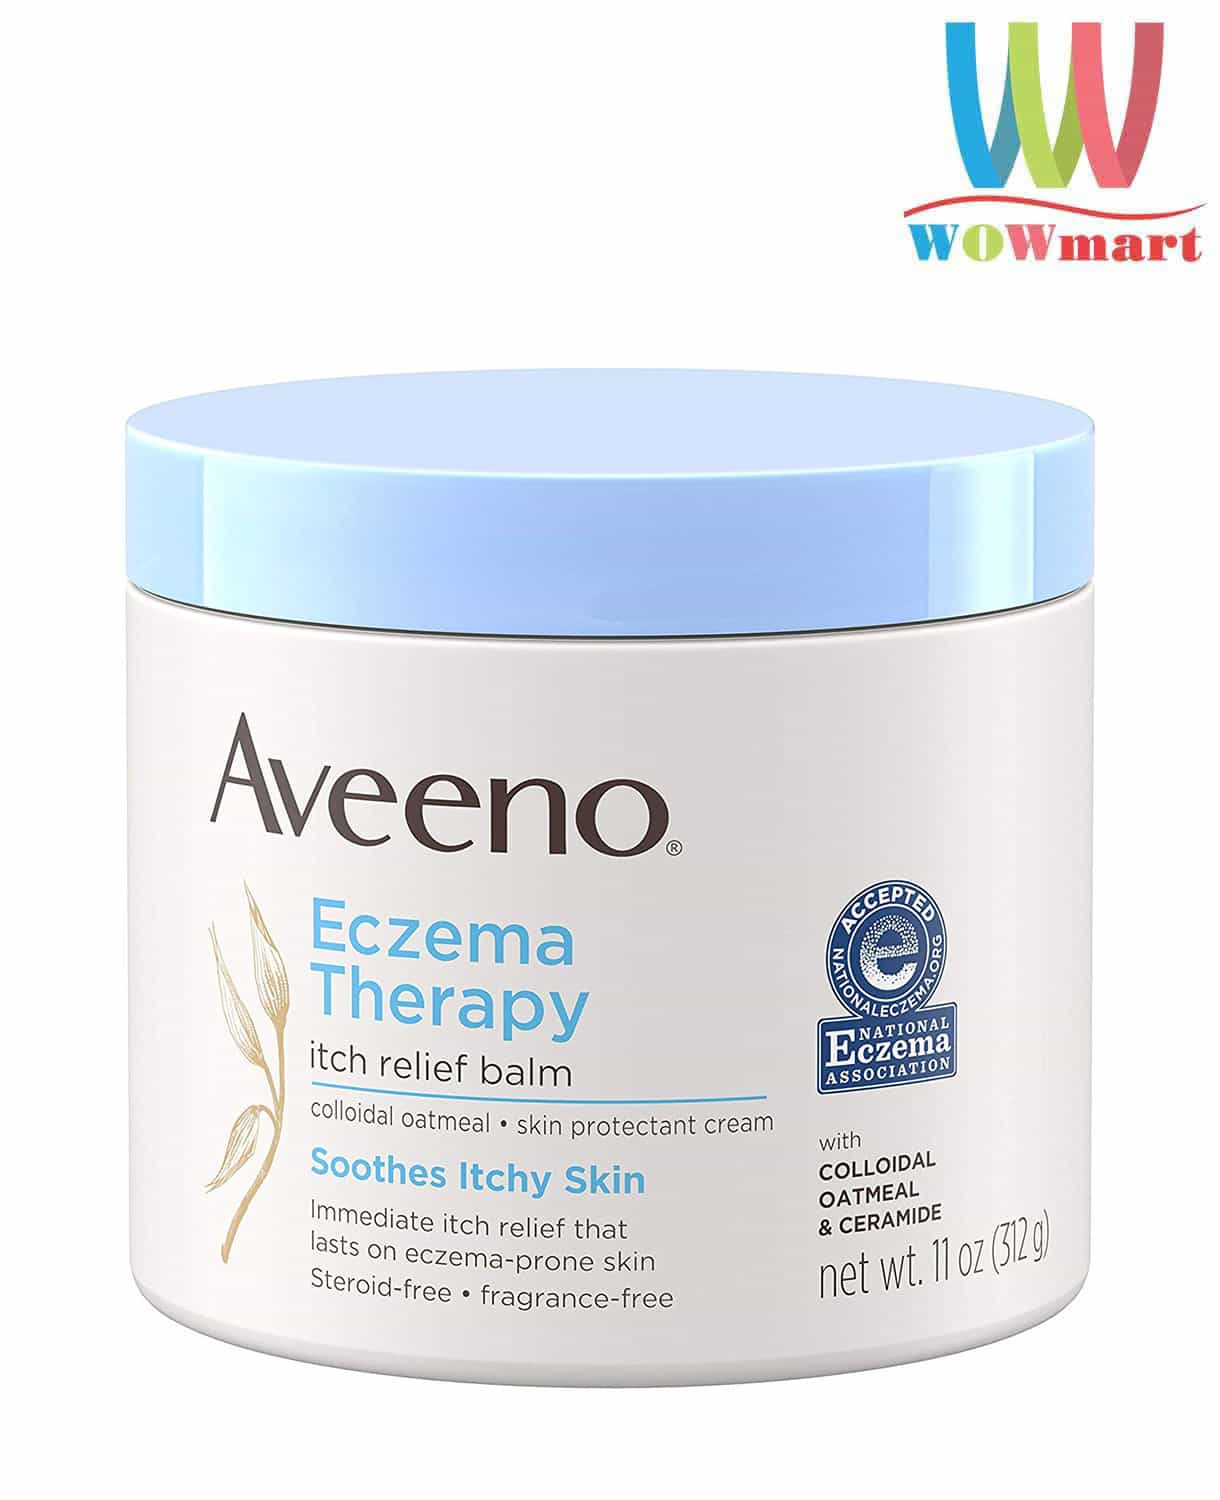 Sản phẩm aveeno eczema therapy giúp giảm triệu chứng eczema hiệu quả